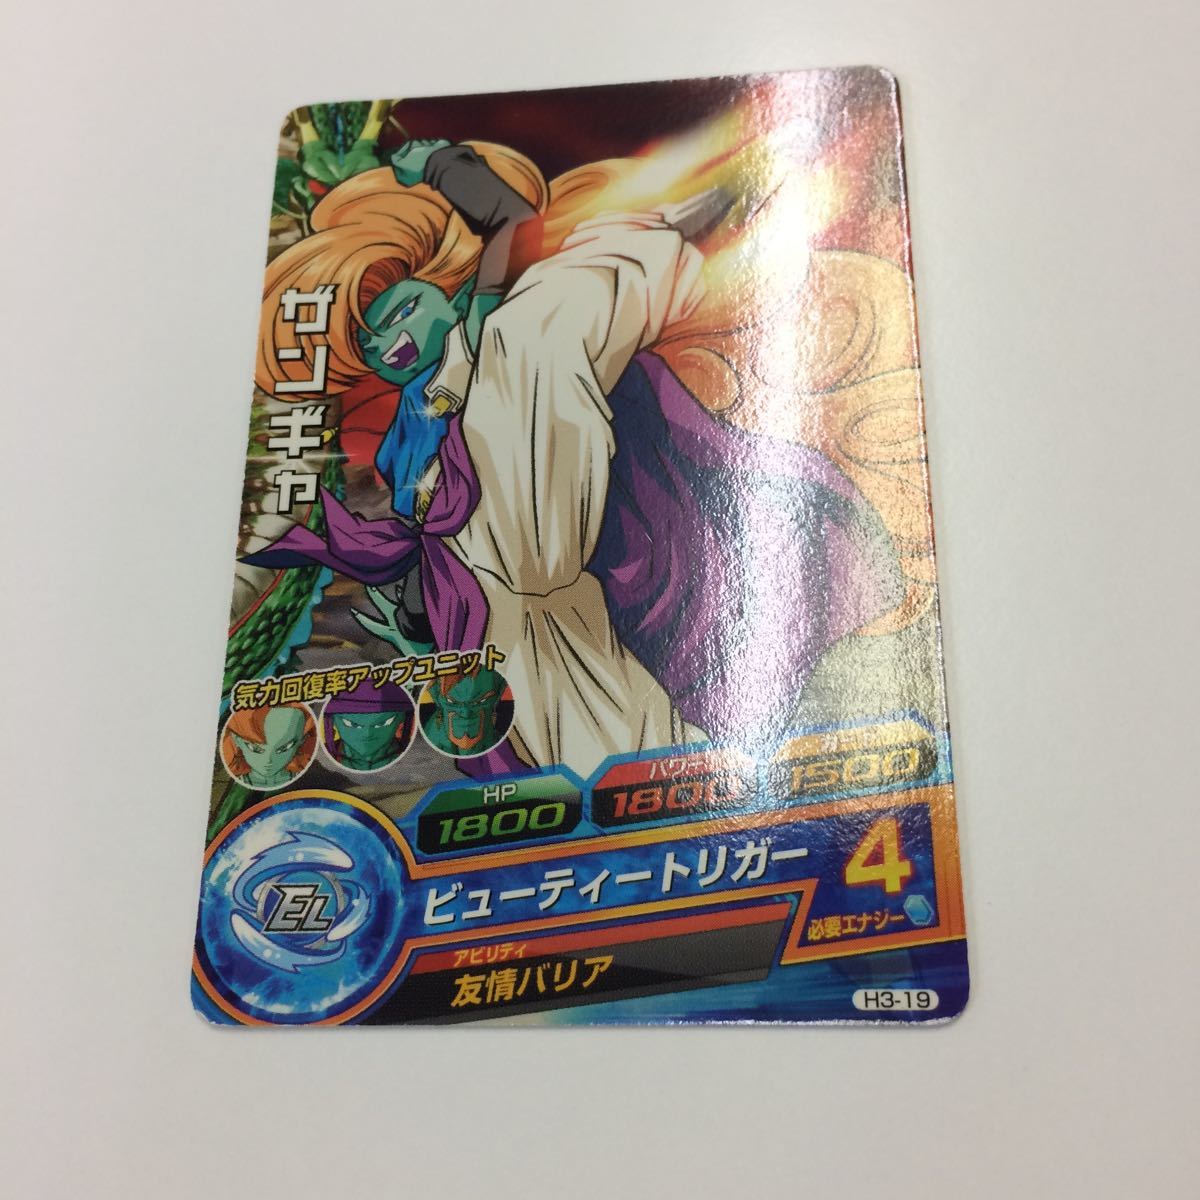 Tanakasan Shop き10 ドラゴンボール ヒーローズ カード ザンギャ ビューティートリガー